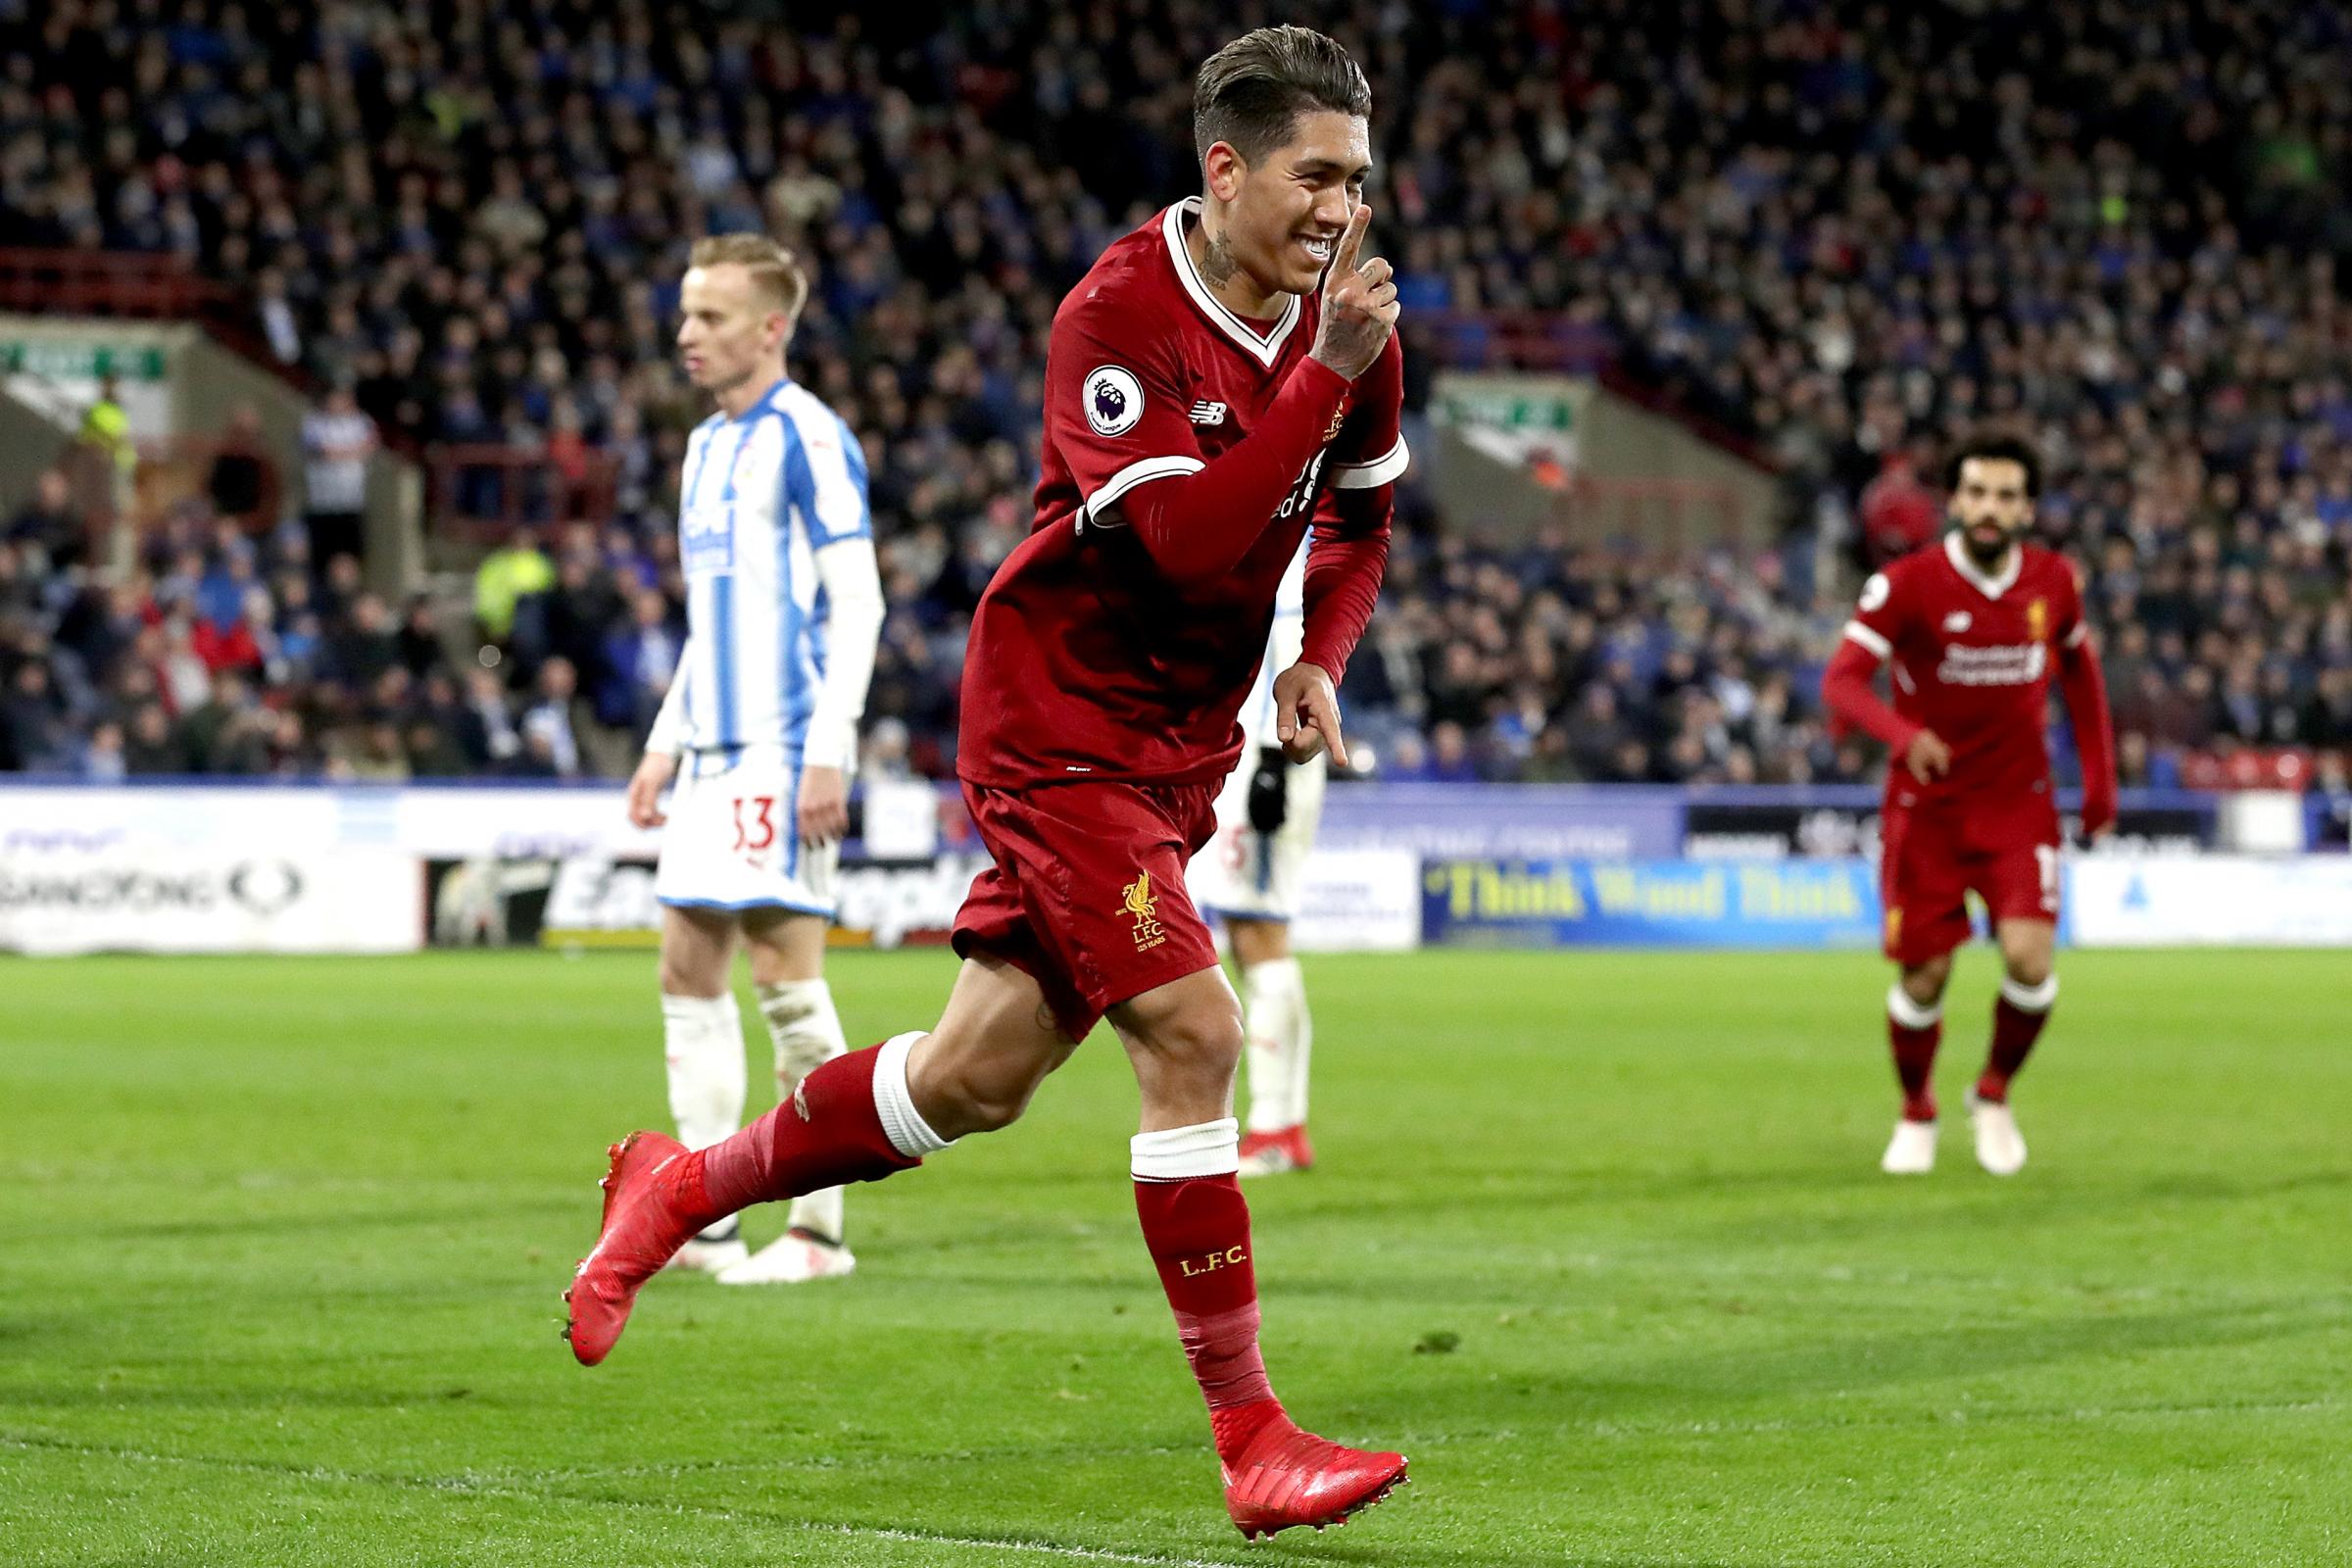 Liverpool return to winning ways against Huddersfield